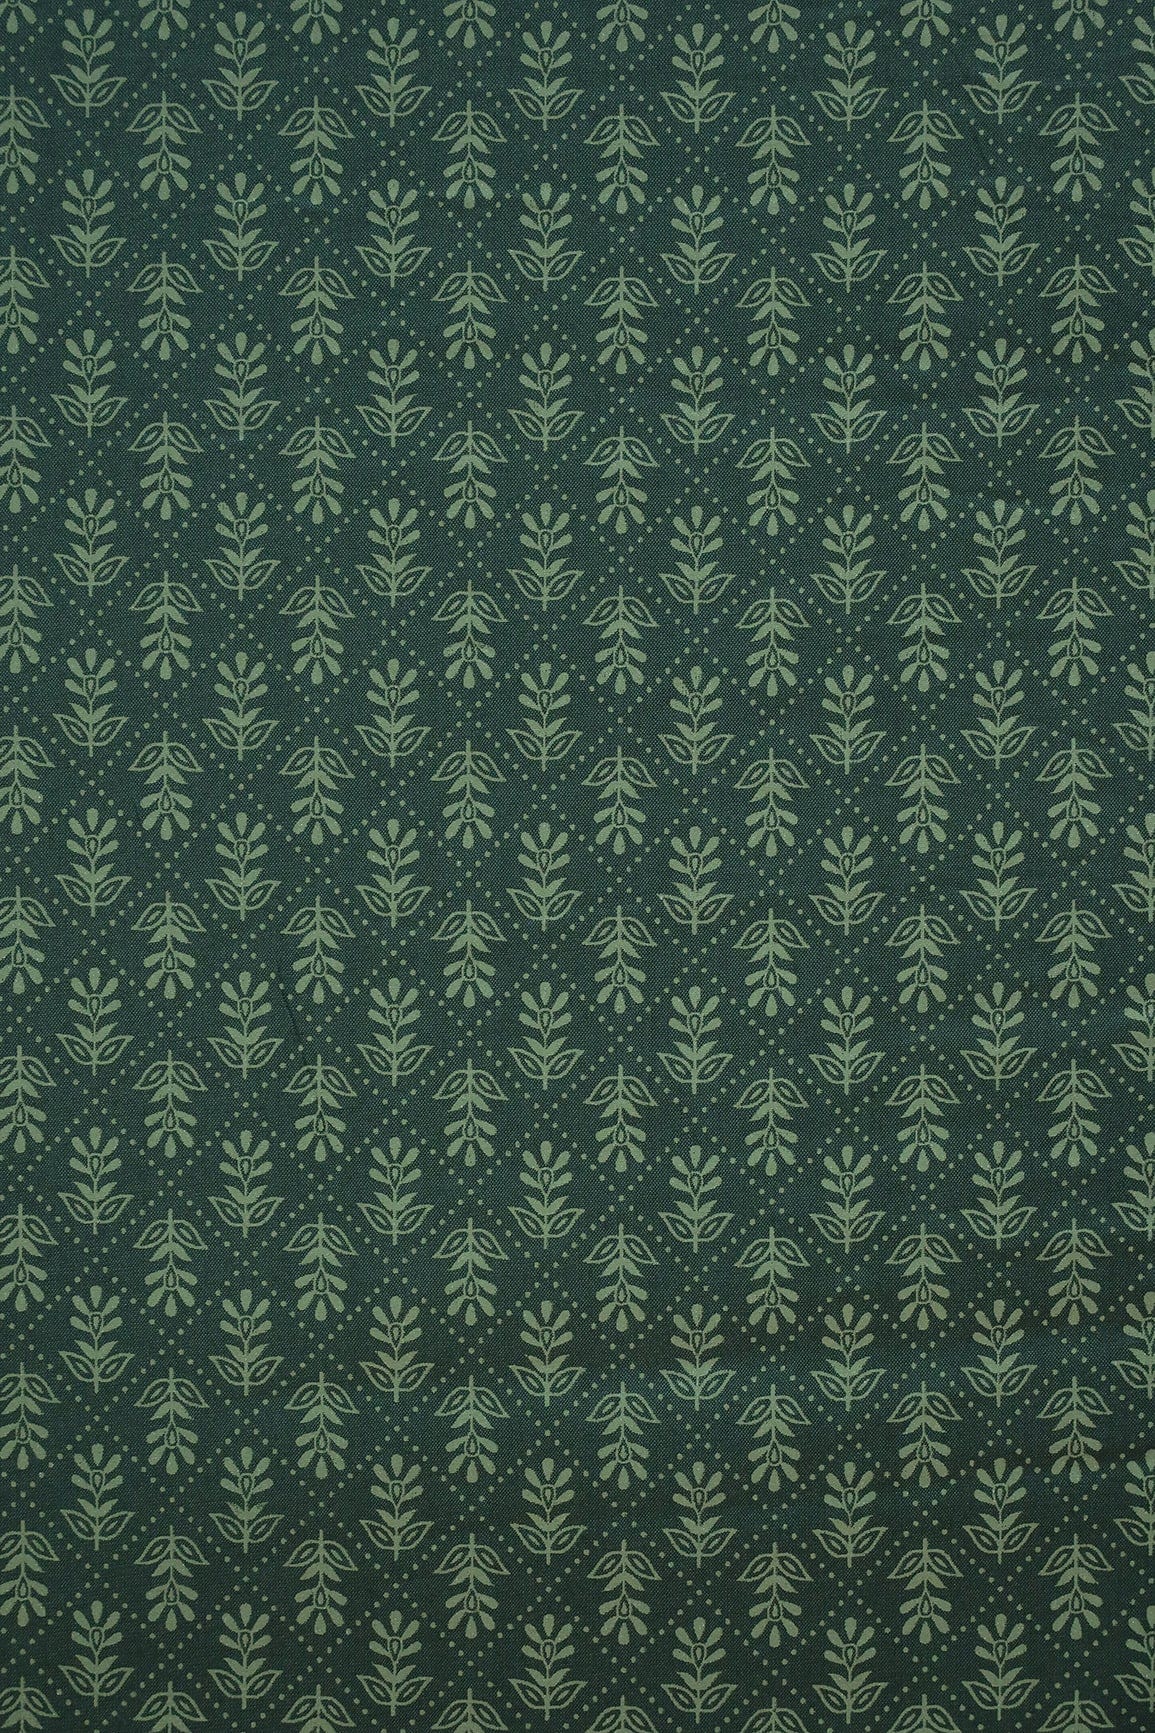 doeraa Prints Bottle Green Small Floral Booti Pattern Screen Print Cotton Rayon Fabric